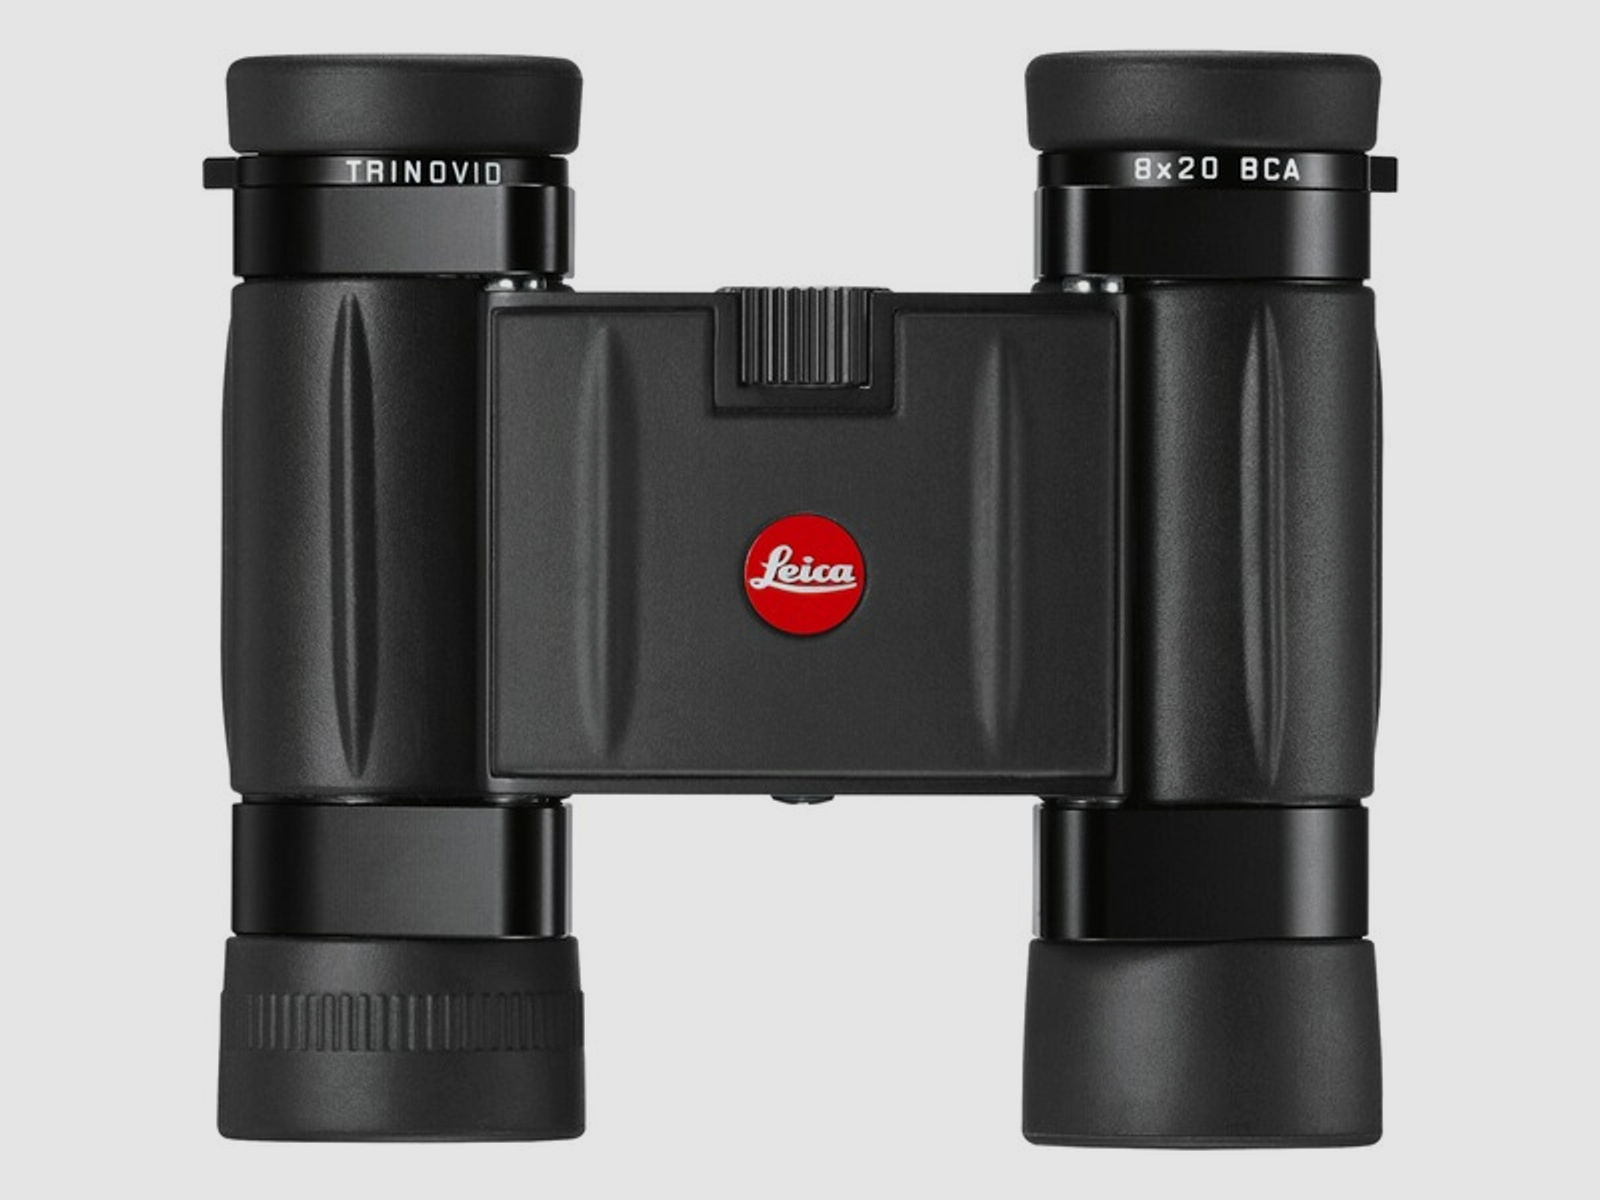 Leica Trinovid 8X20 BCA schwarz mit Etui